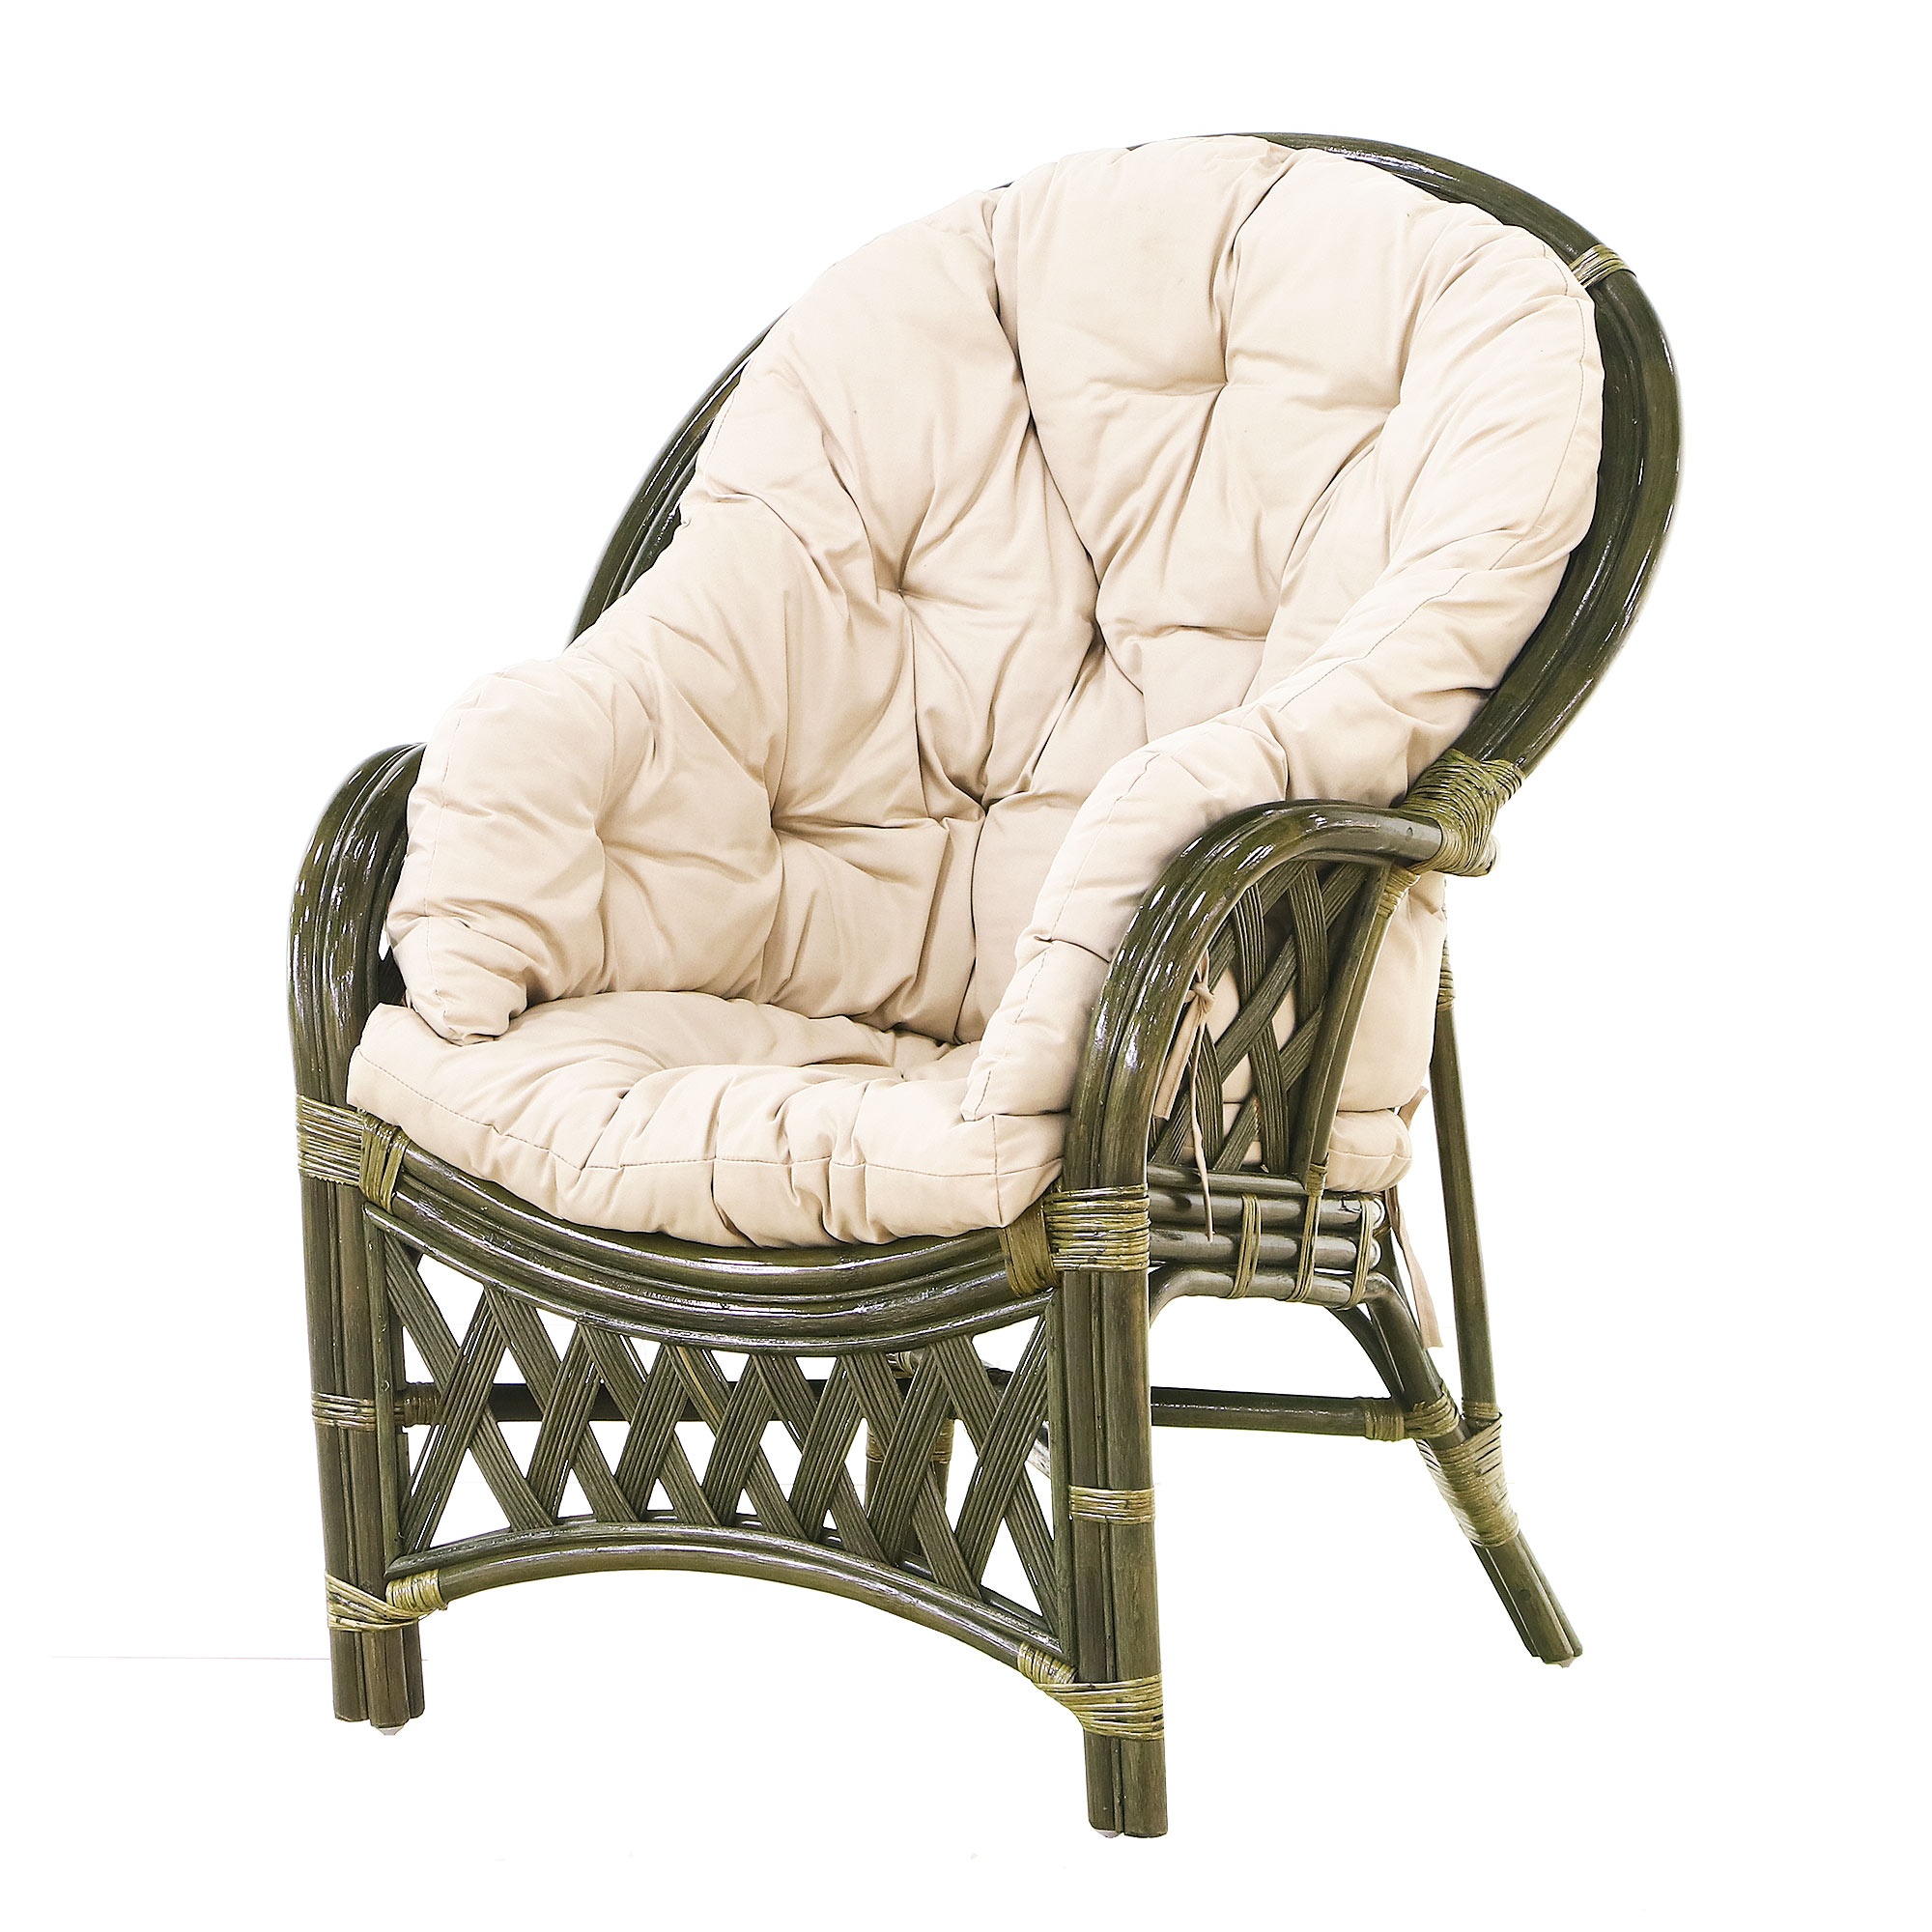 Комплект мебели Rattan grand amalfi olive: диван, стол, 2 кресла, цвет оливковый - фото 5